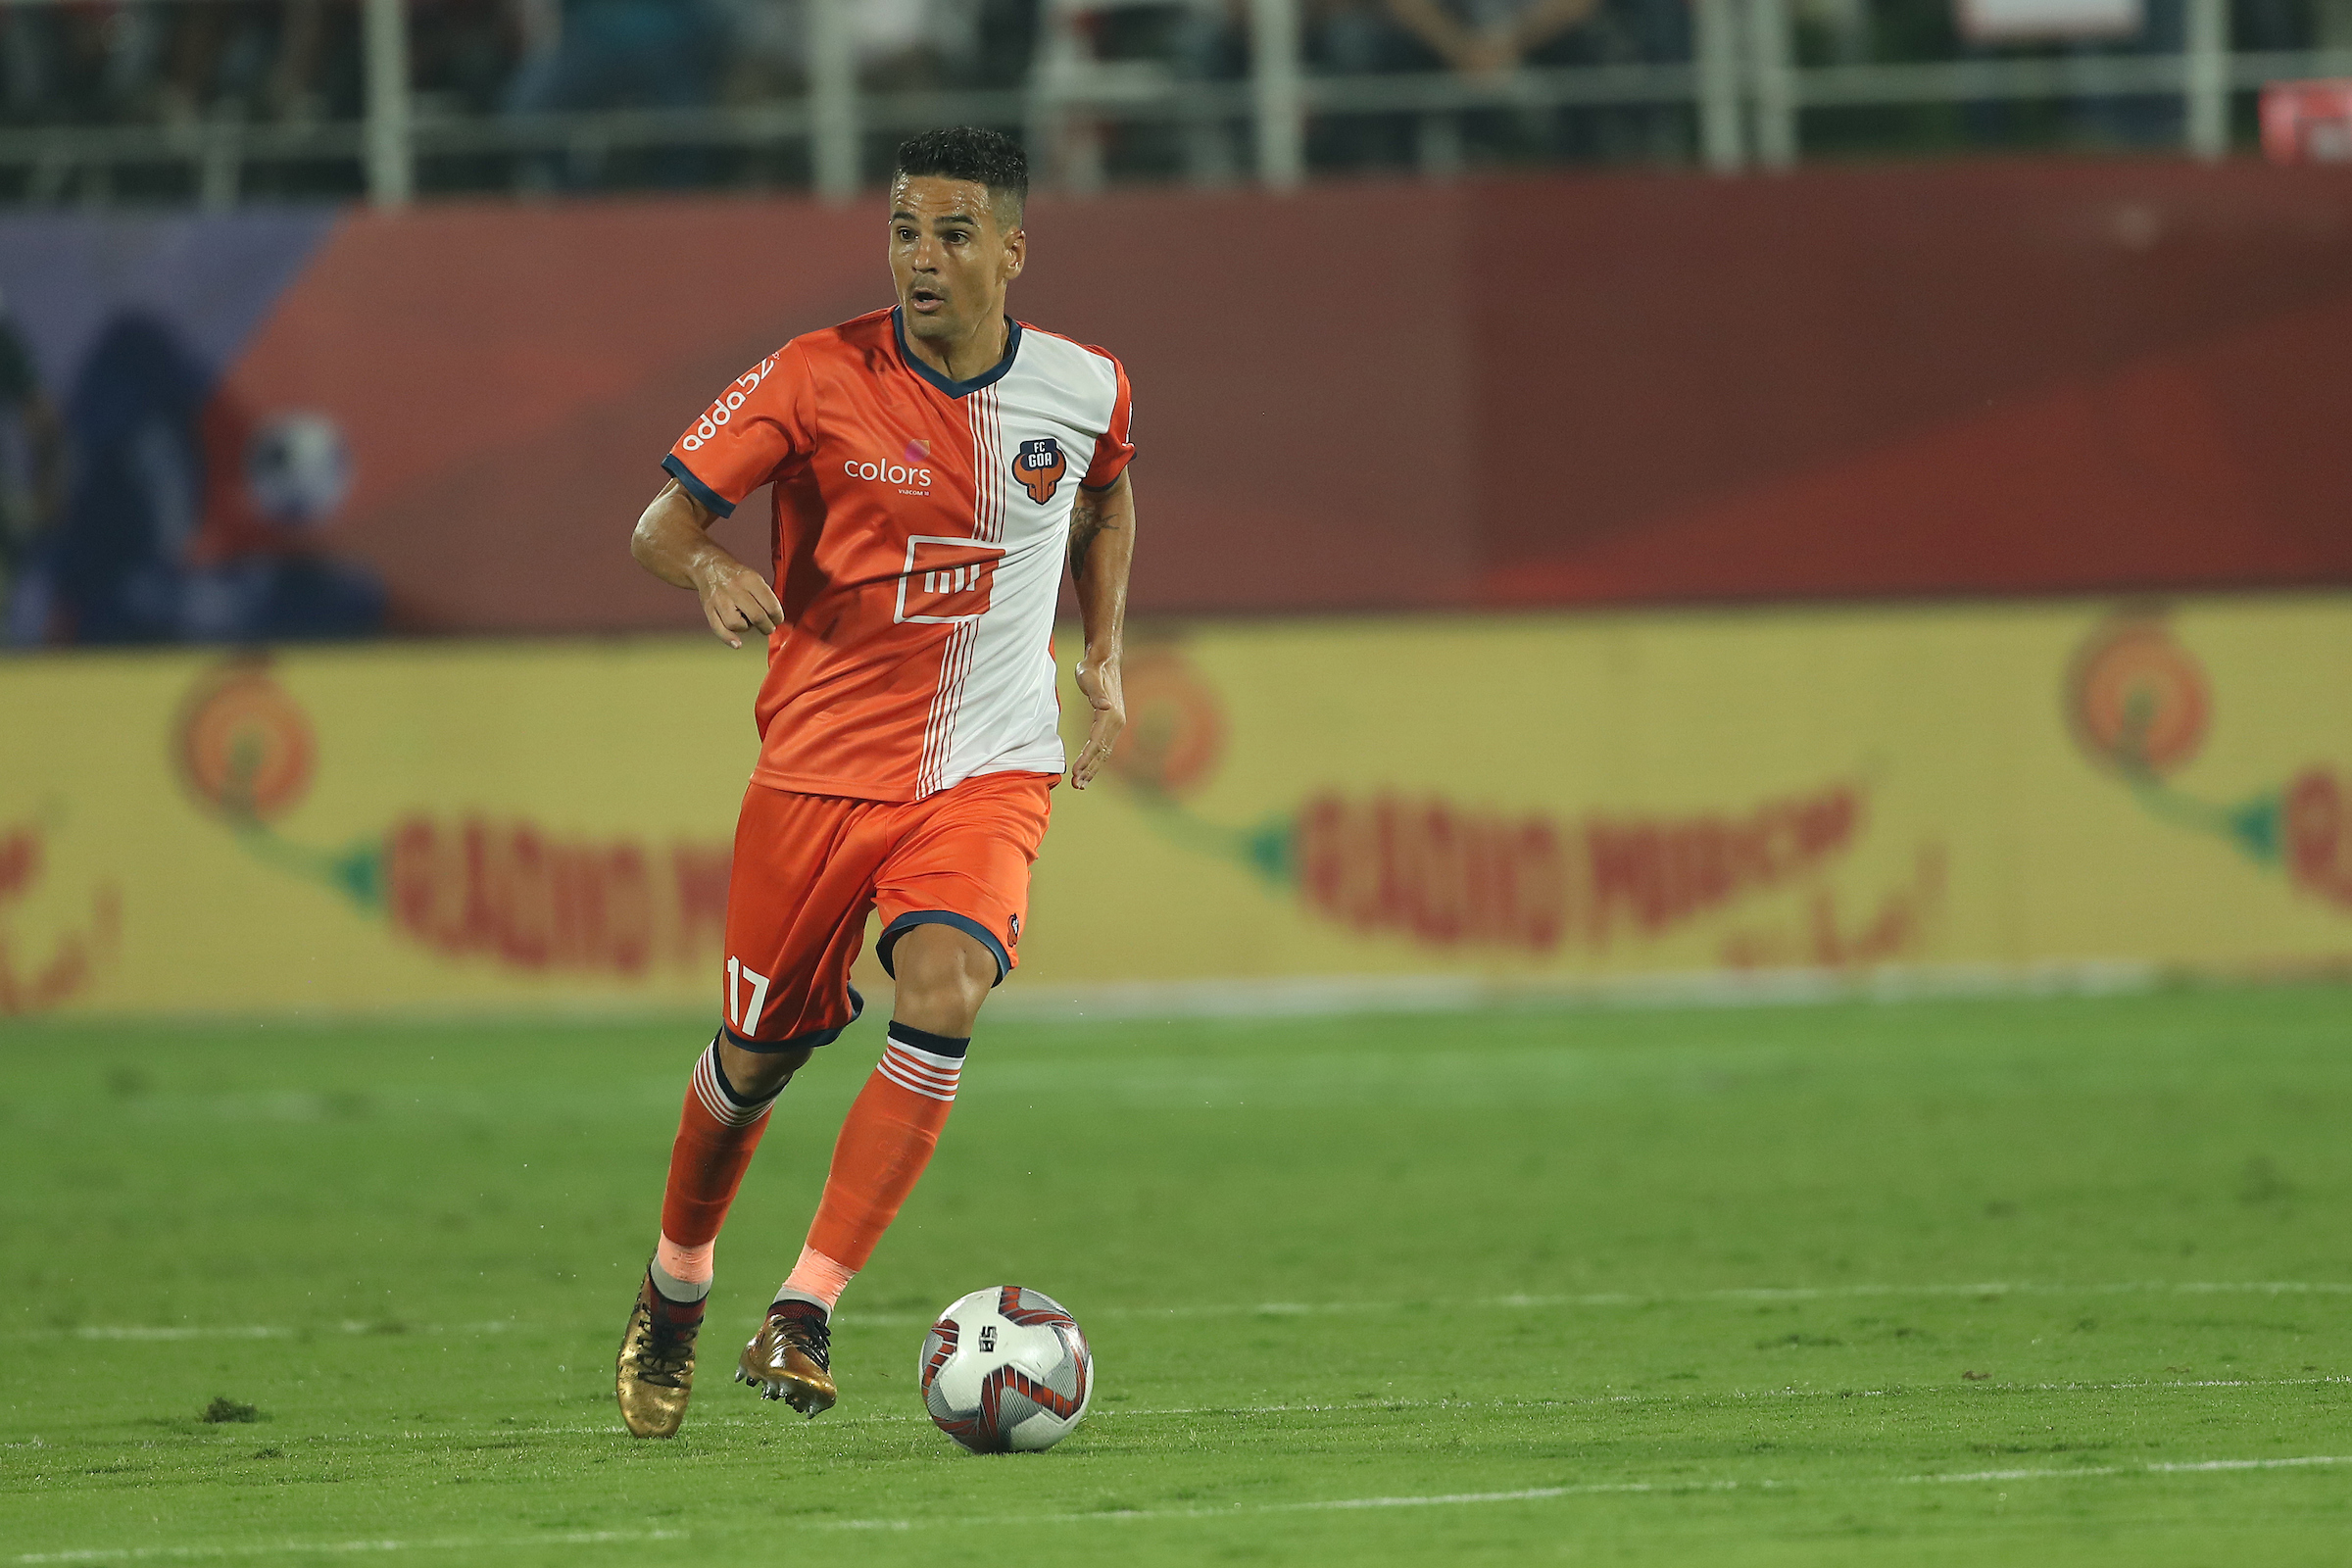 ISL 2019-20 | This time around pressure is on Bengaluru FC, feels Carlos Peña